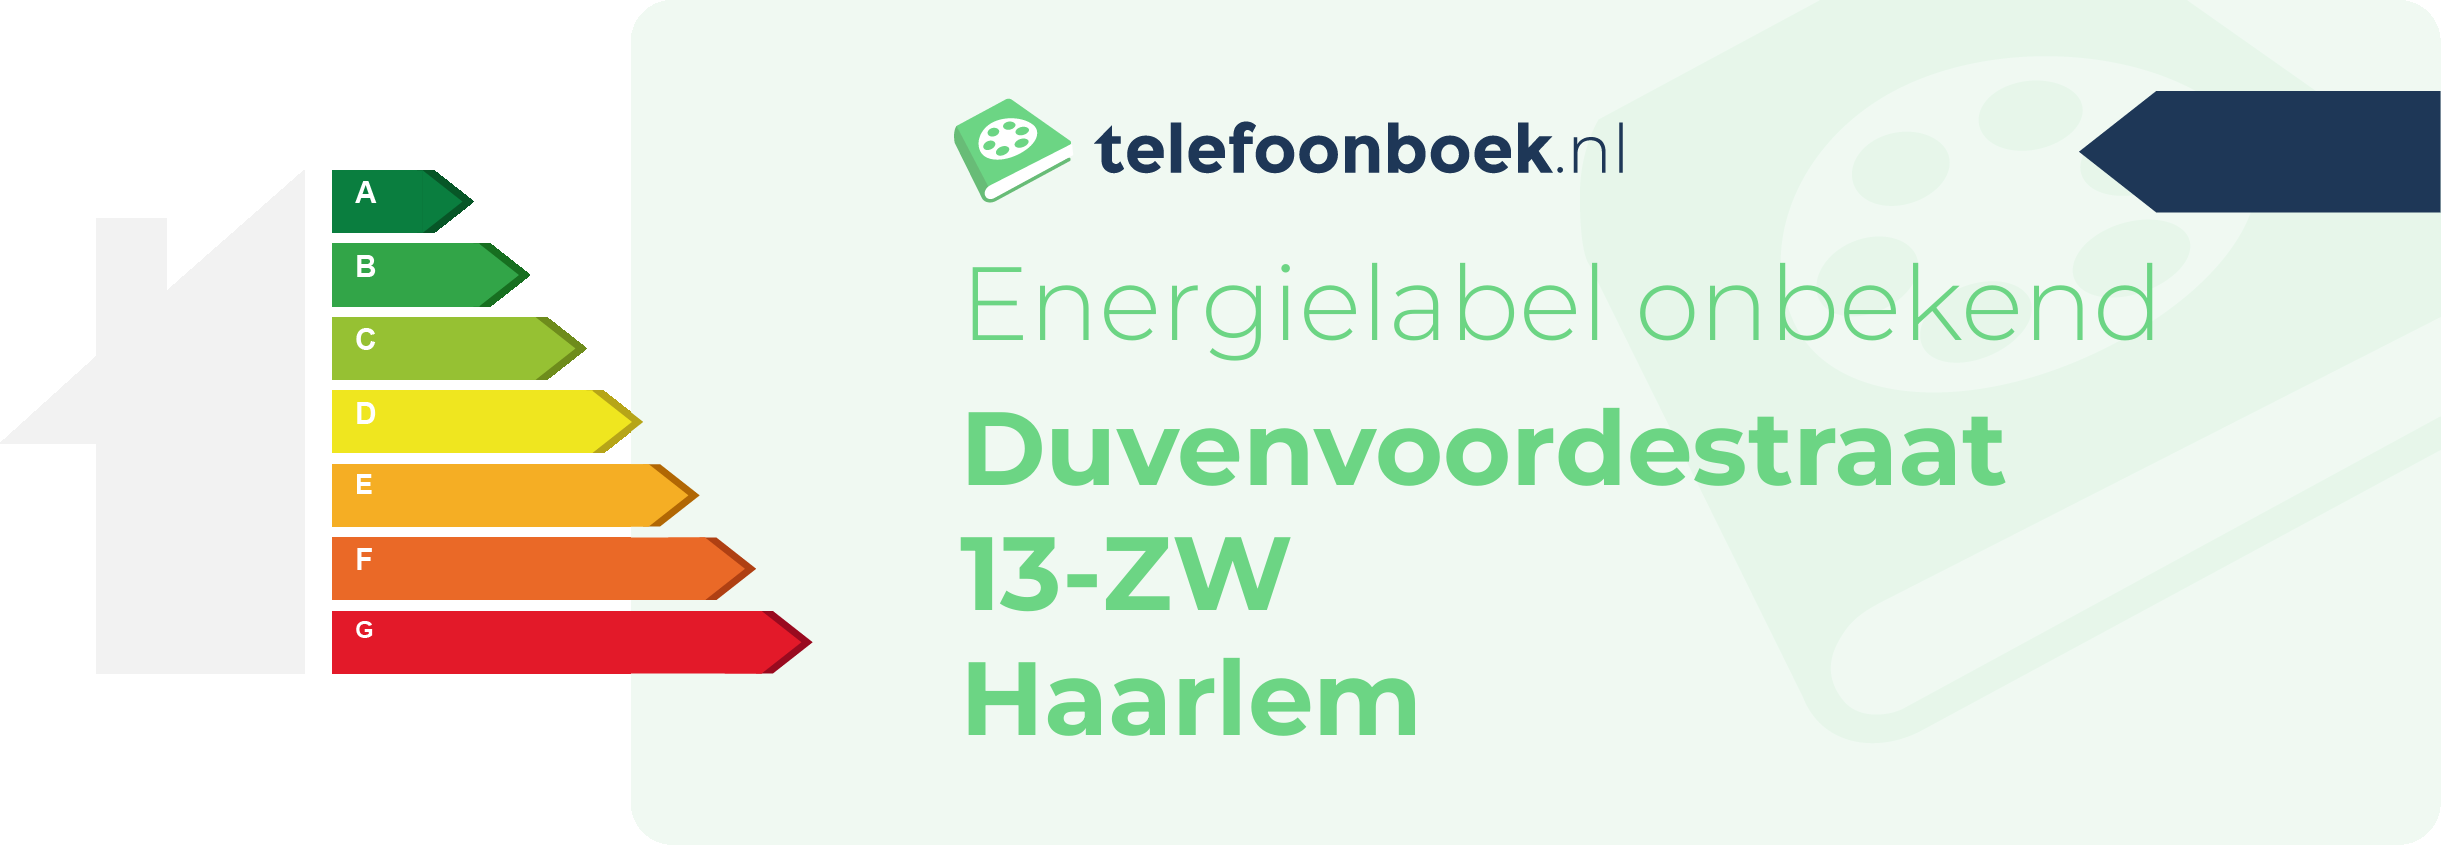 Energielabel Duvenvoordestraat 13-ZW Haarlem